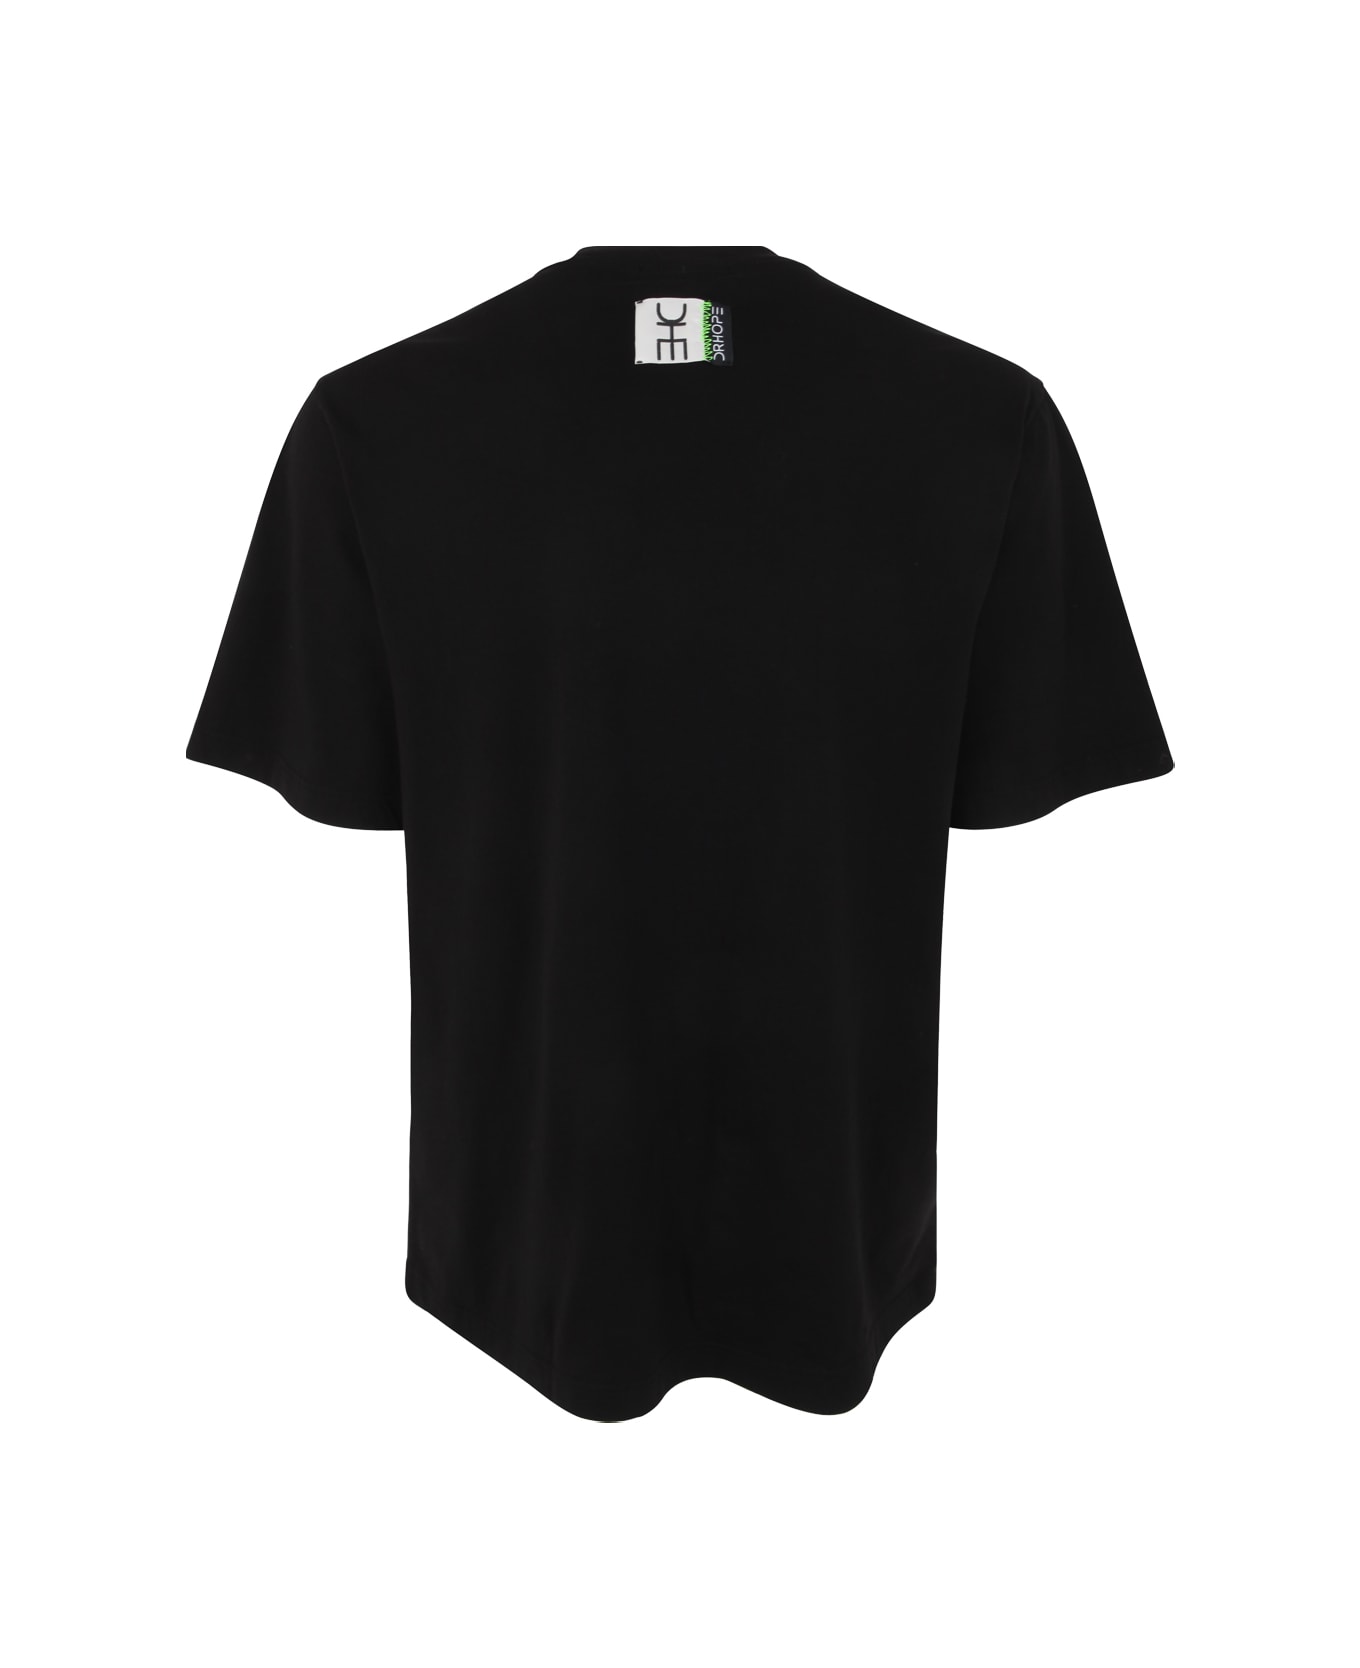 Drhope Printed T-shirt - Black